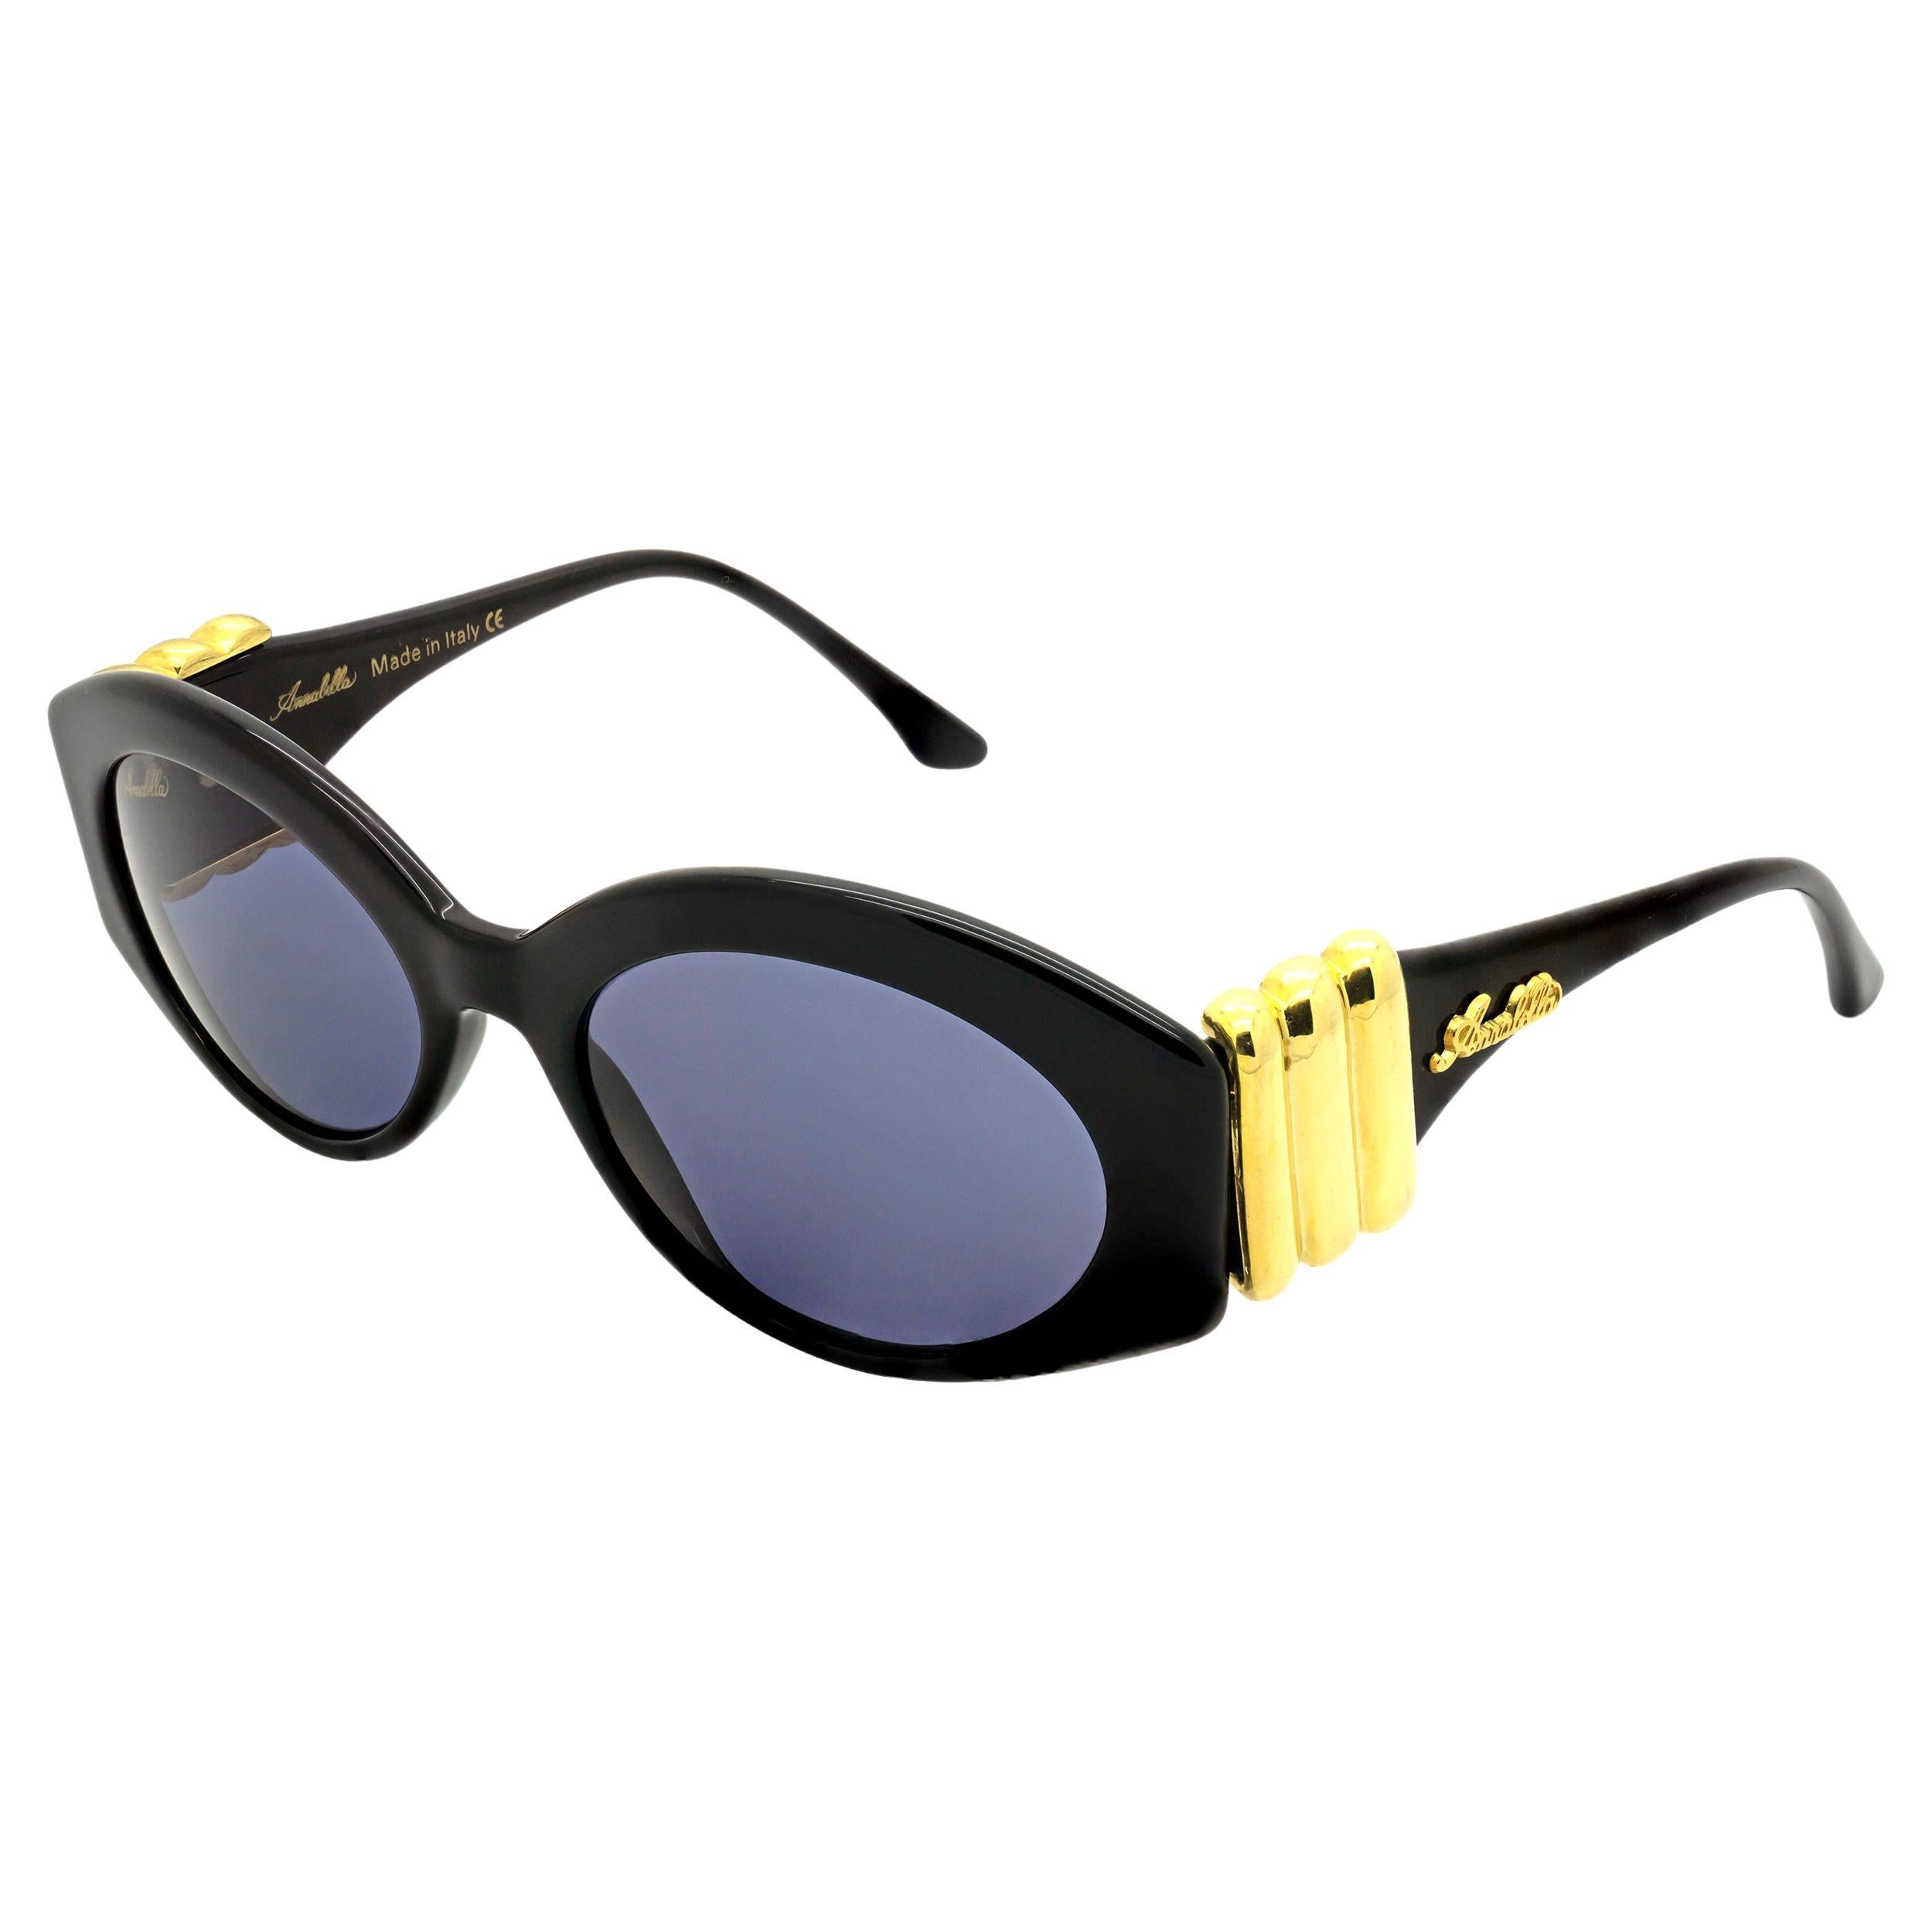 2 Pairs Sunglasses Designer Retro Mens Womens Fashion 1 Black n 1 Turquoise 8831 